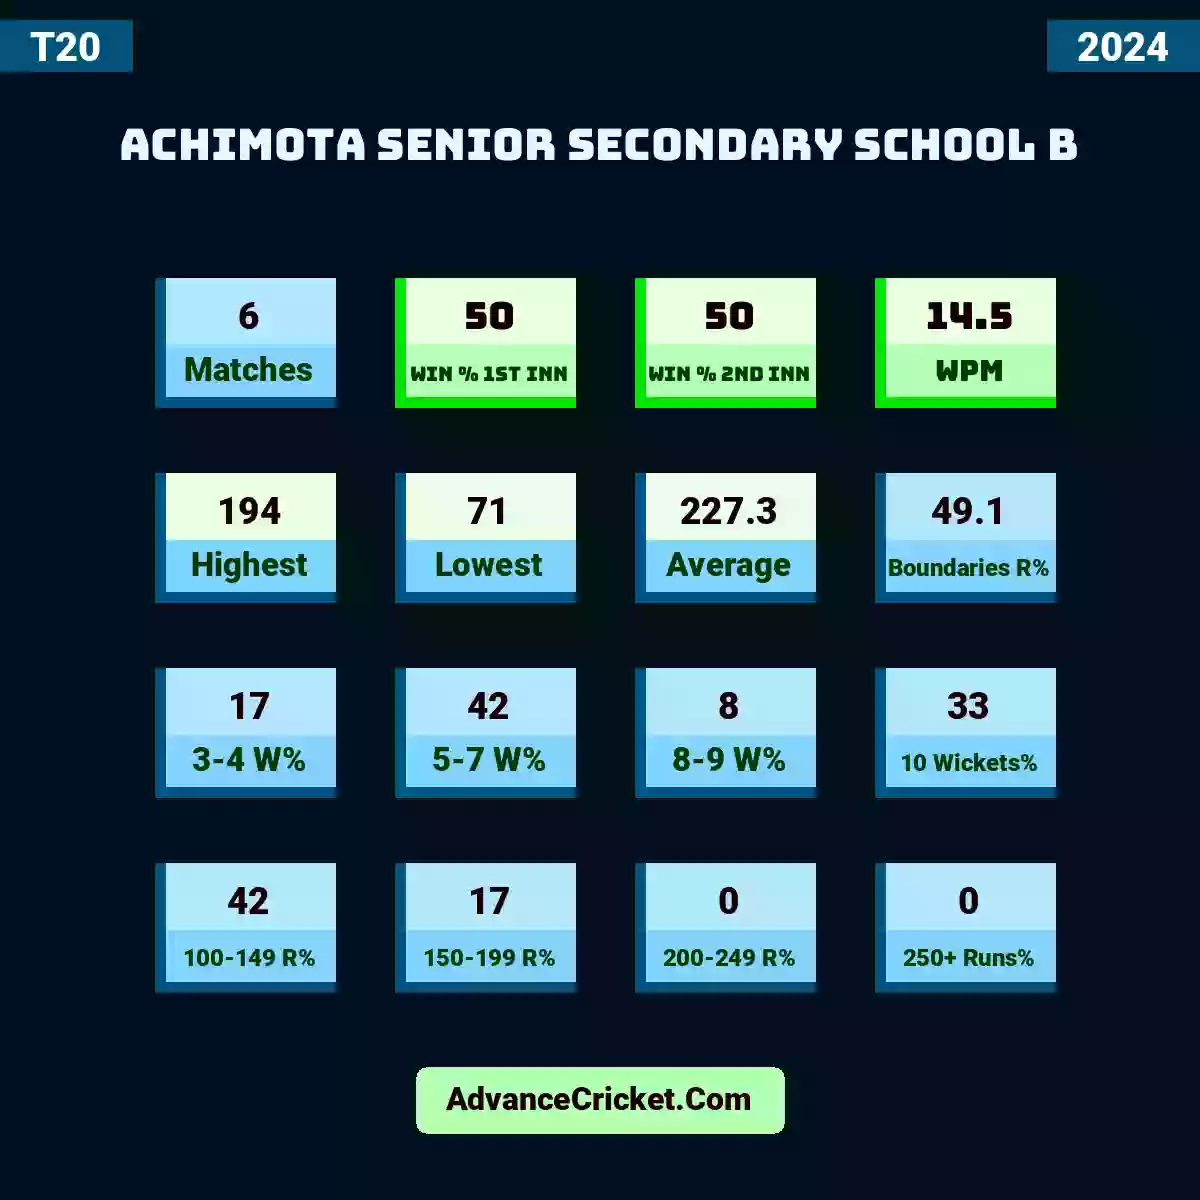 Image showing Achimota Senior Secondary School B with Matches: 6, Win % 1st Inn: 50, Win % 2nd Inn: 50, WPM: 14.5, Highest: 194, Lowest: 71, Average: 227.3, Boundaries R%: 49.1, 3-4 W%: 17, 5-7 W%: 42, 8-9 W%: 8, 10 Wickets%: 33, 100-149 R%: 42, 150-199 R%: 17, 200-249 R%: 0, 250+ Runs%: 0.